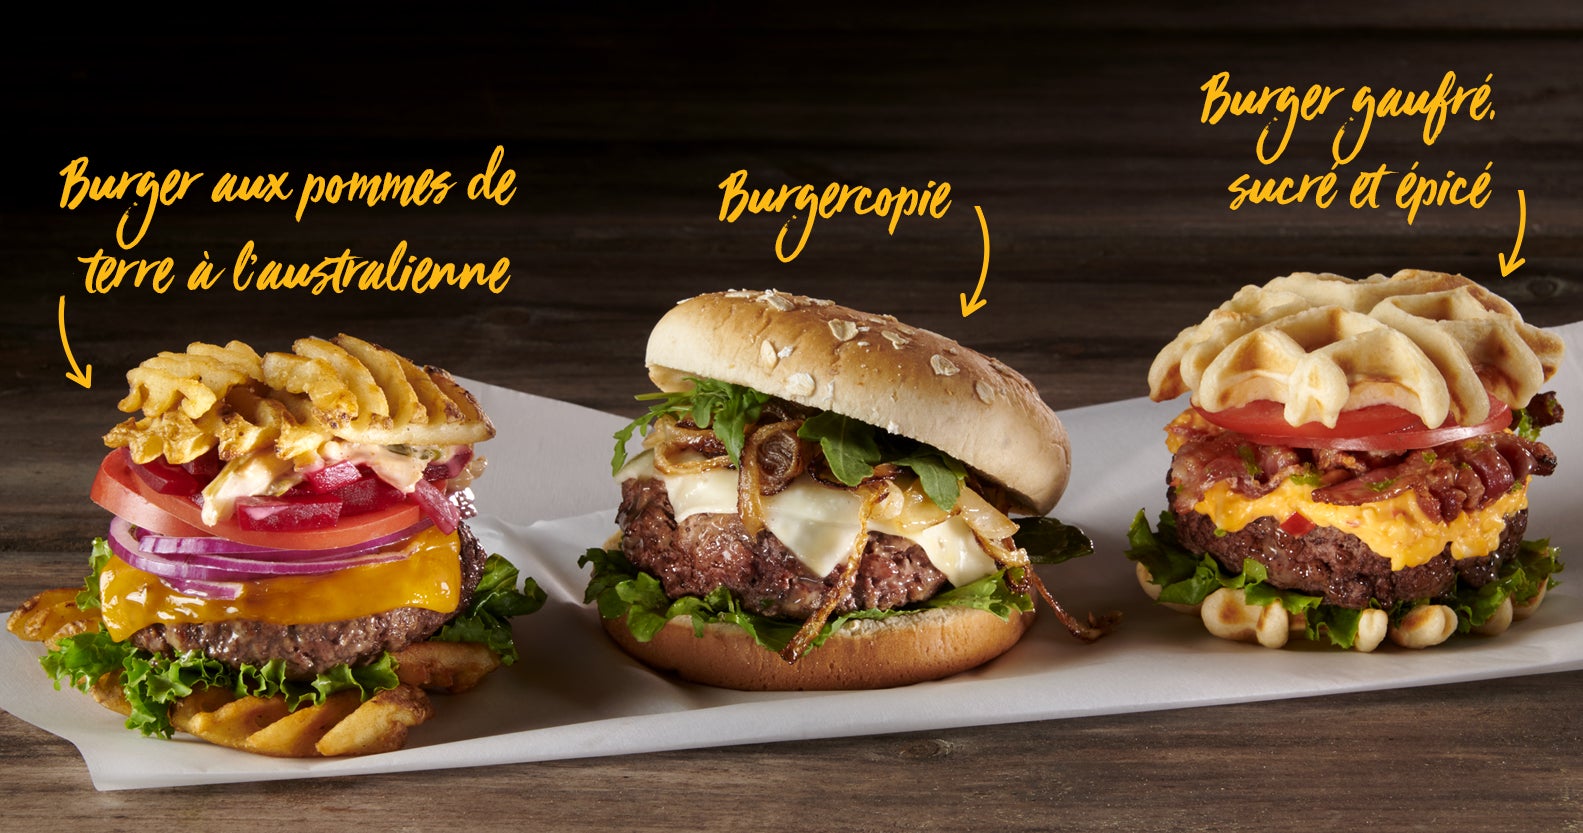 Aussie-Style Lattice Potato Burger, Burgercopia, Sweet and Spicy Waff-urger